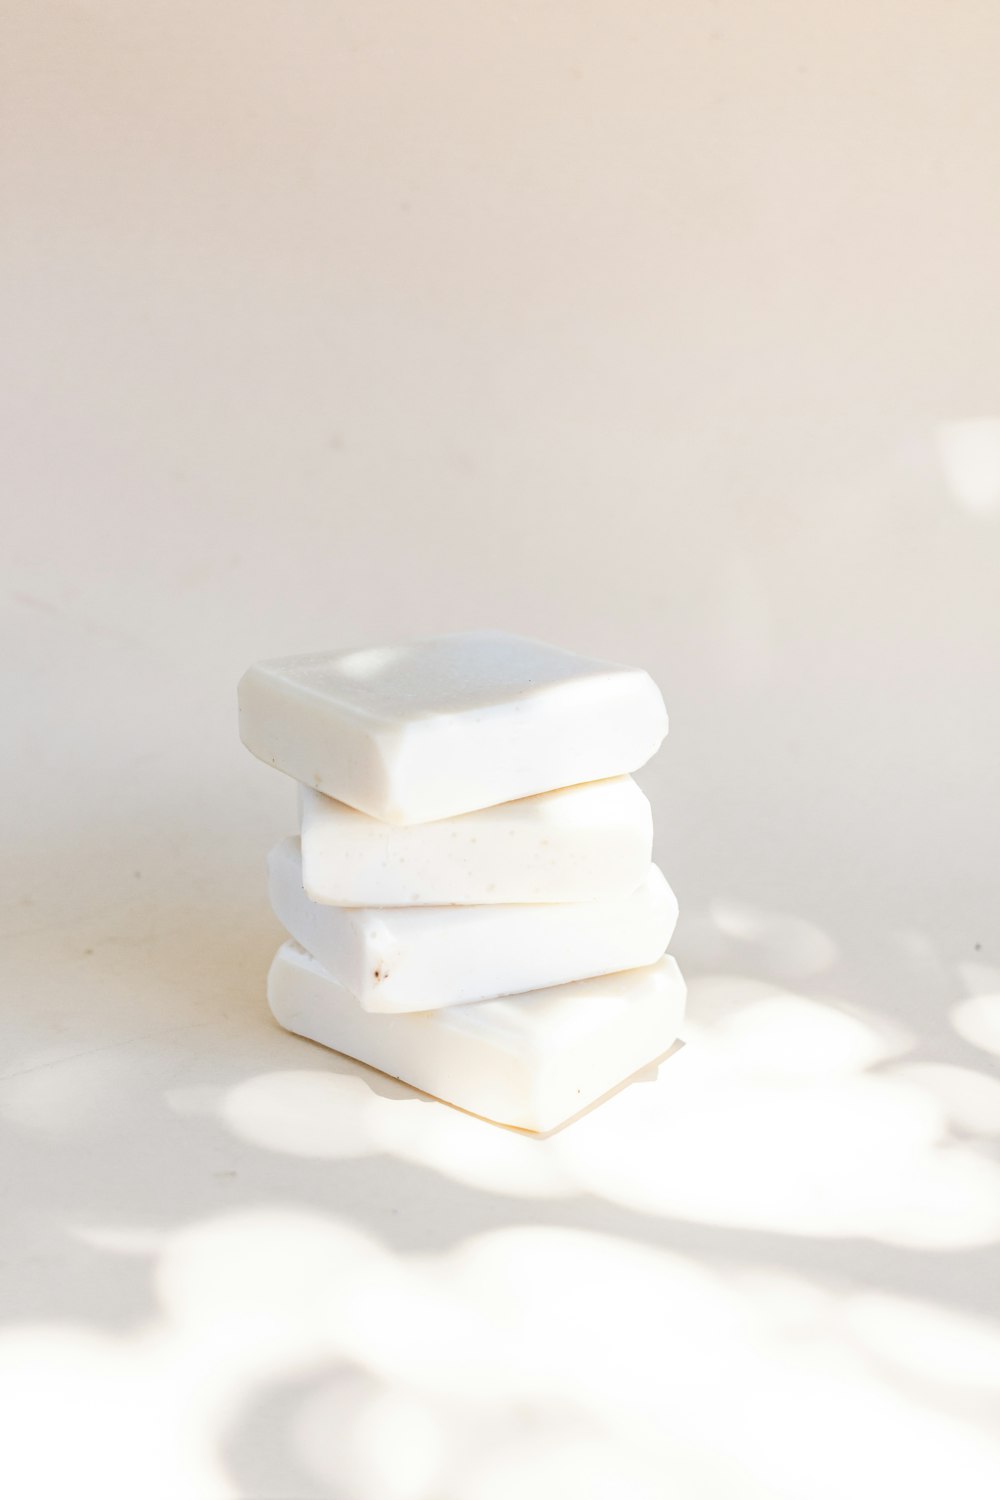 sapone bianco sul tavolo bianco